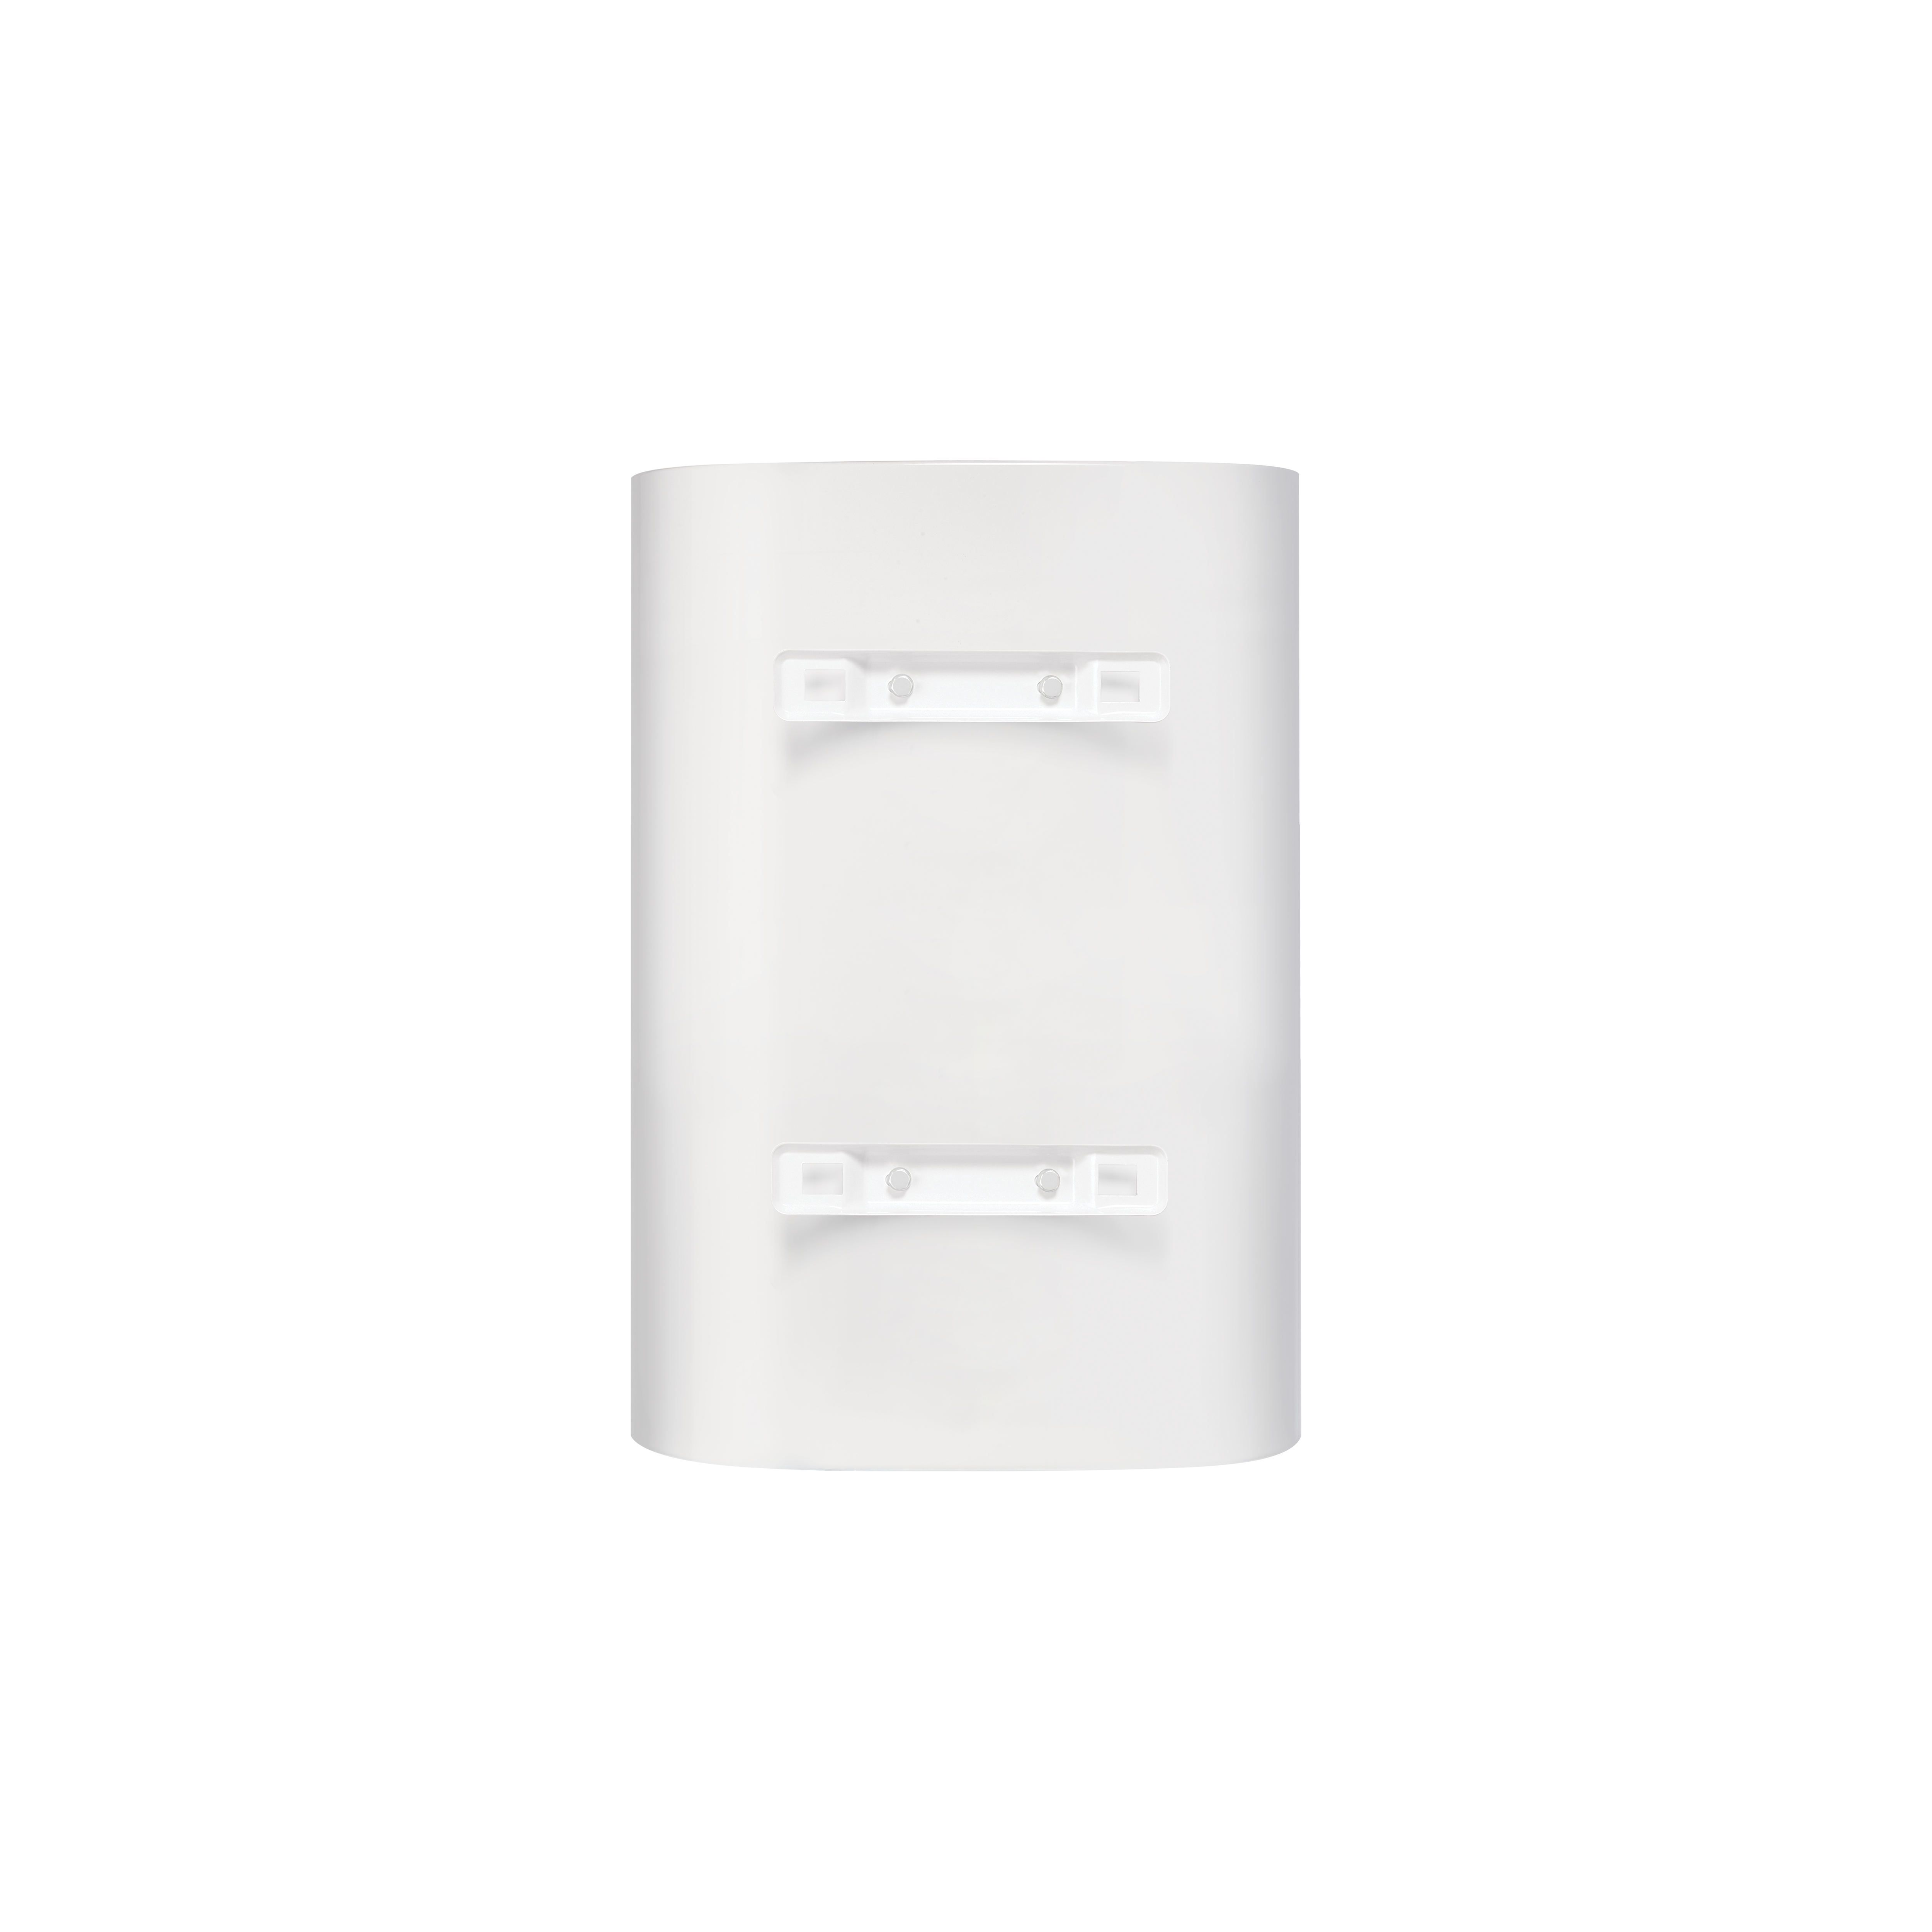 Electrolux EWH 30 Maximus Wi-Fi (эмаль)